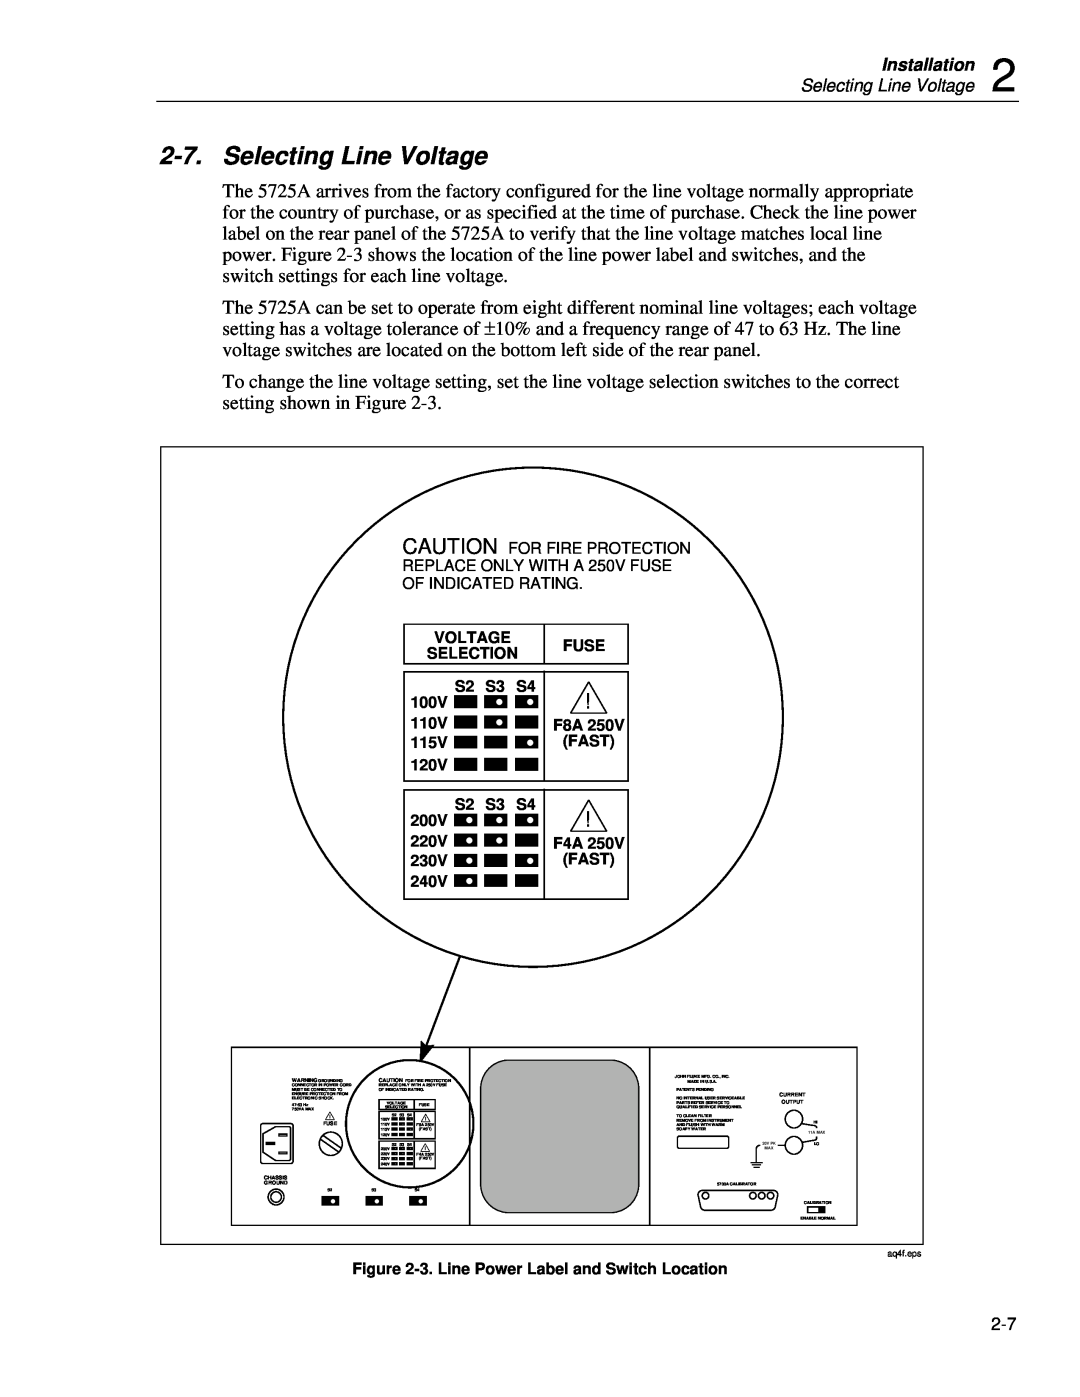 Fluke 5725A instruction manual Selecting Line Voltage 